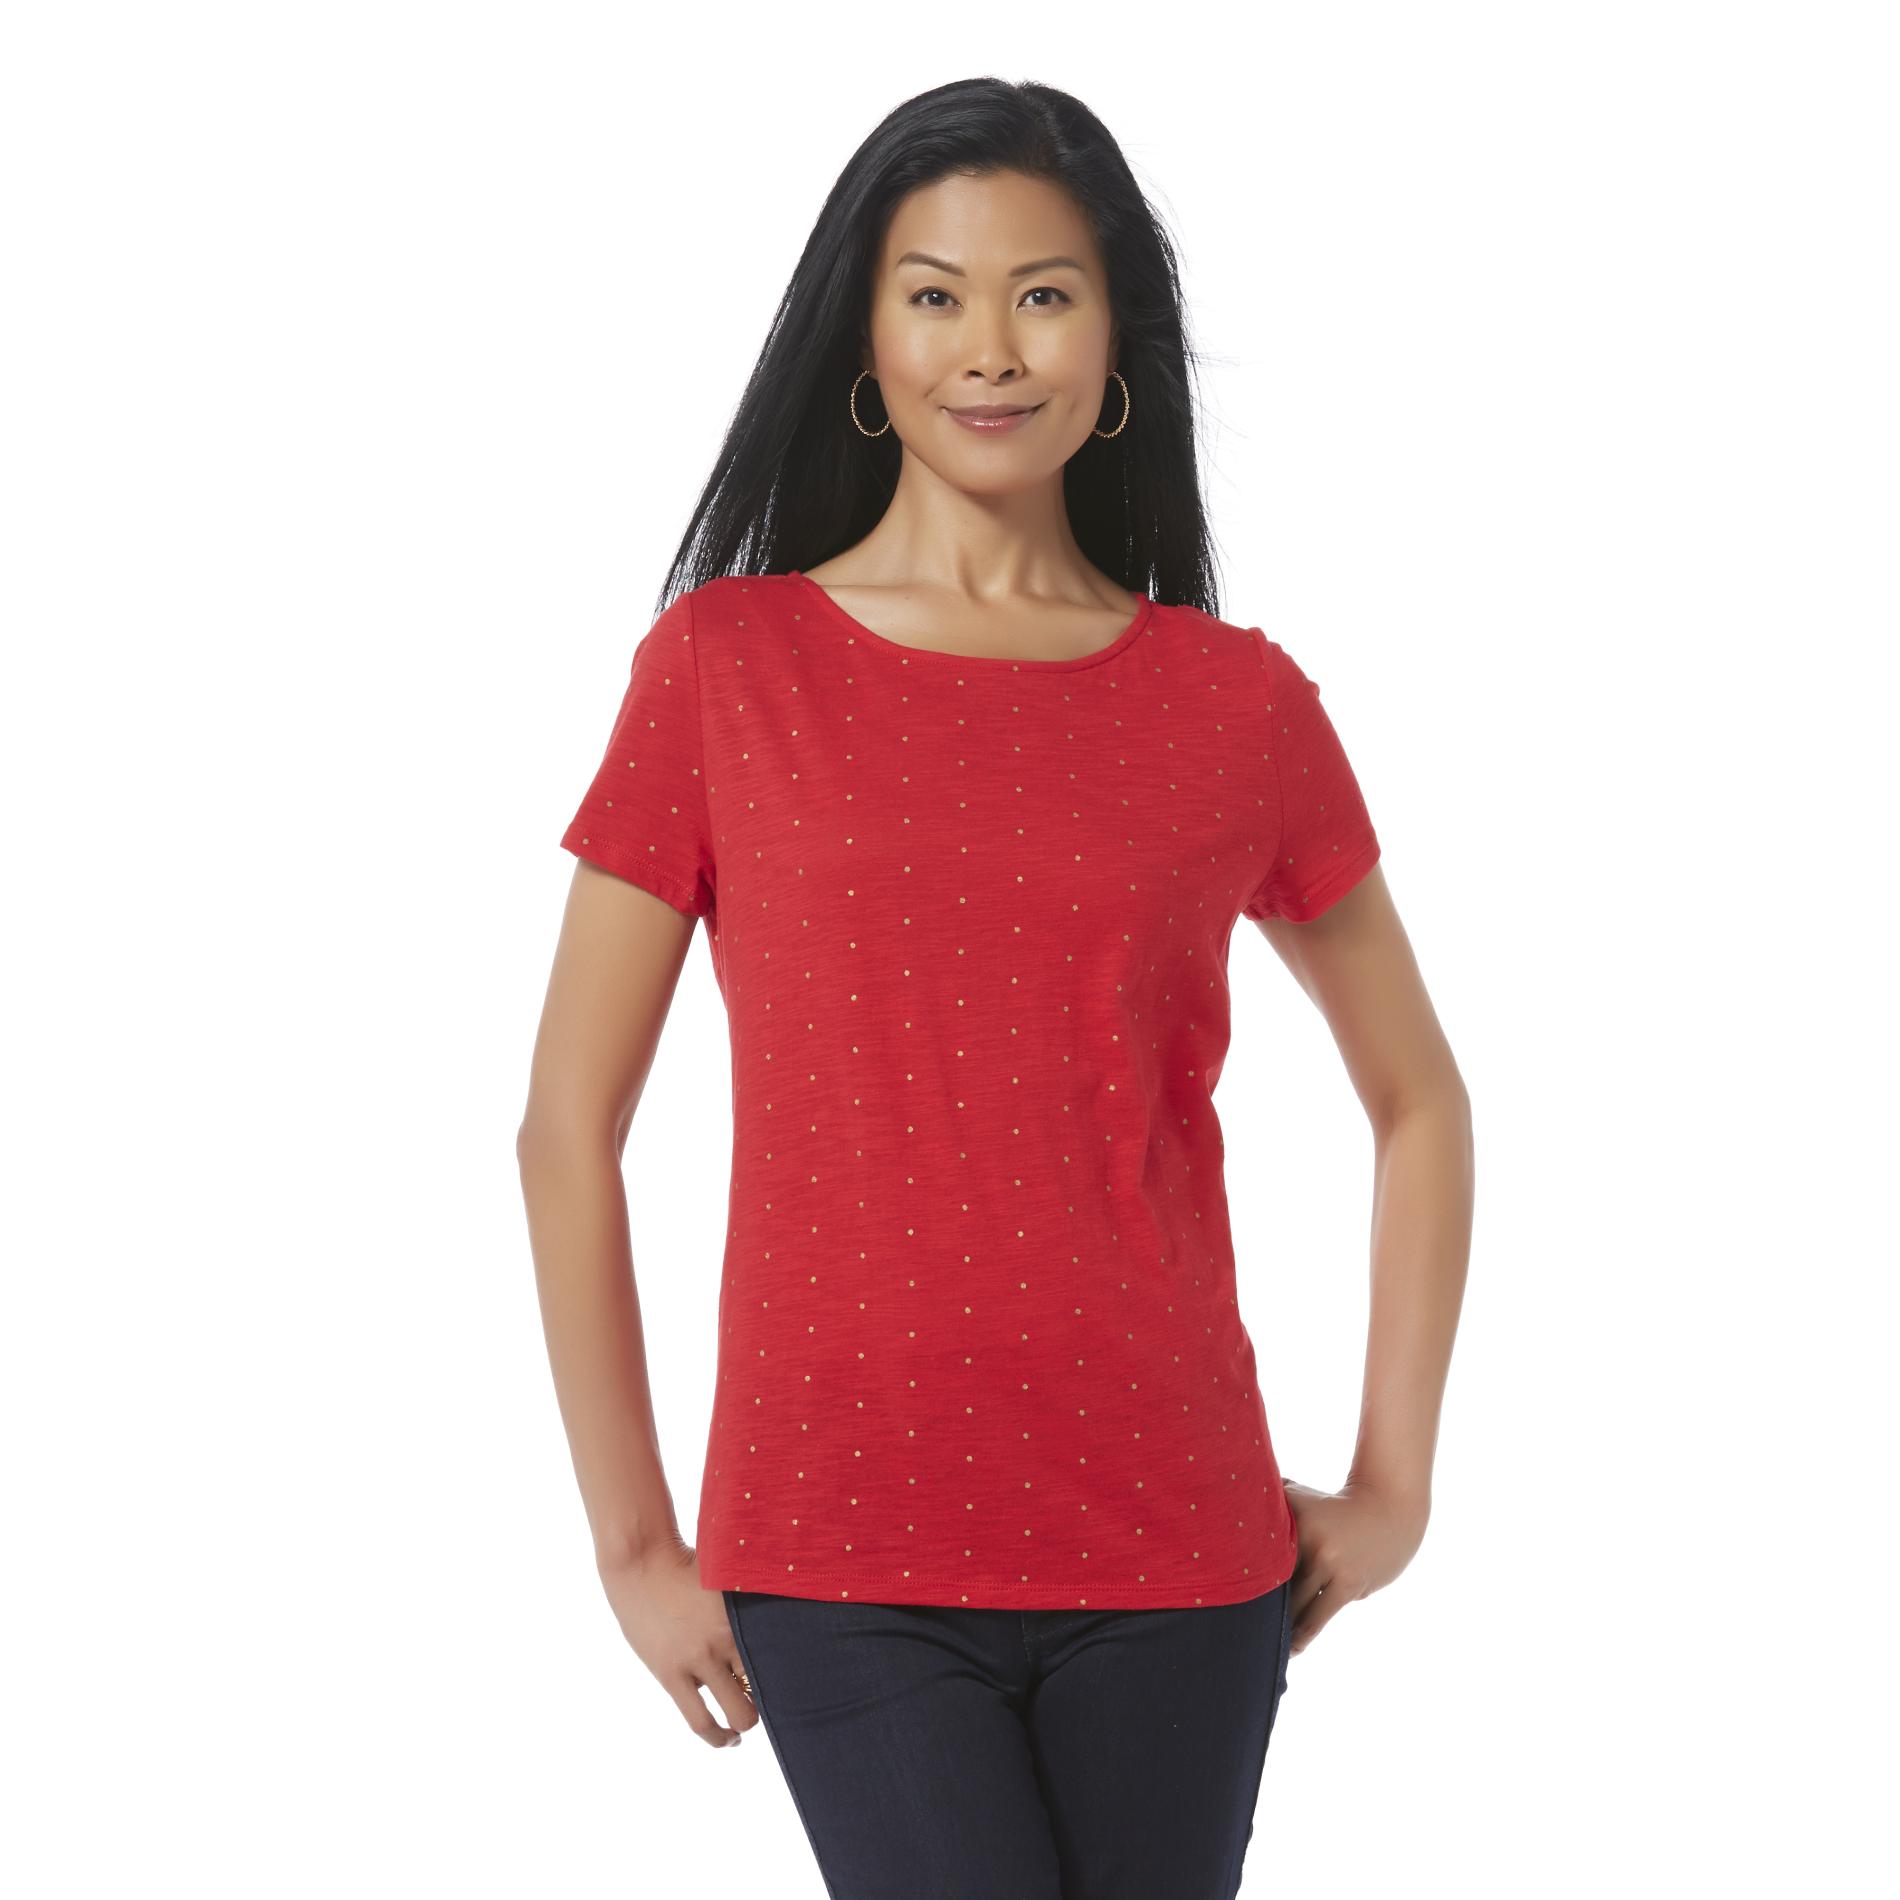 Basic Editions Women's Slub Knit T-Shirt